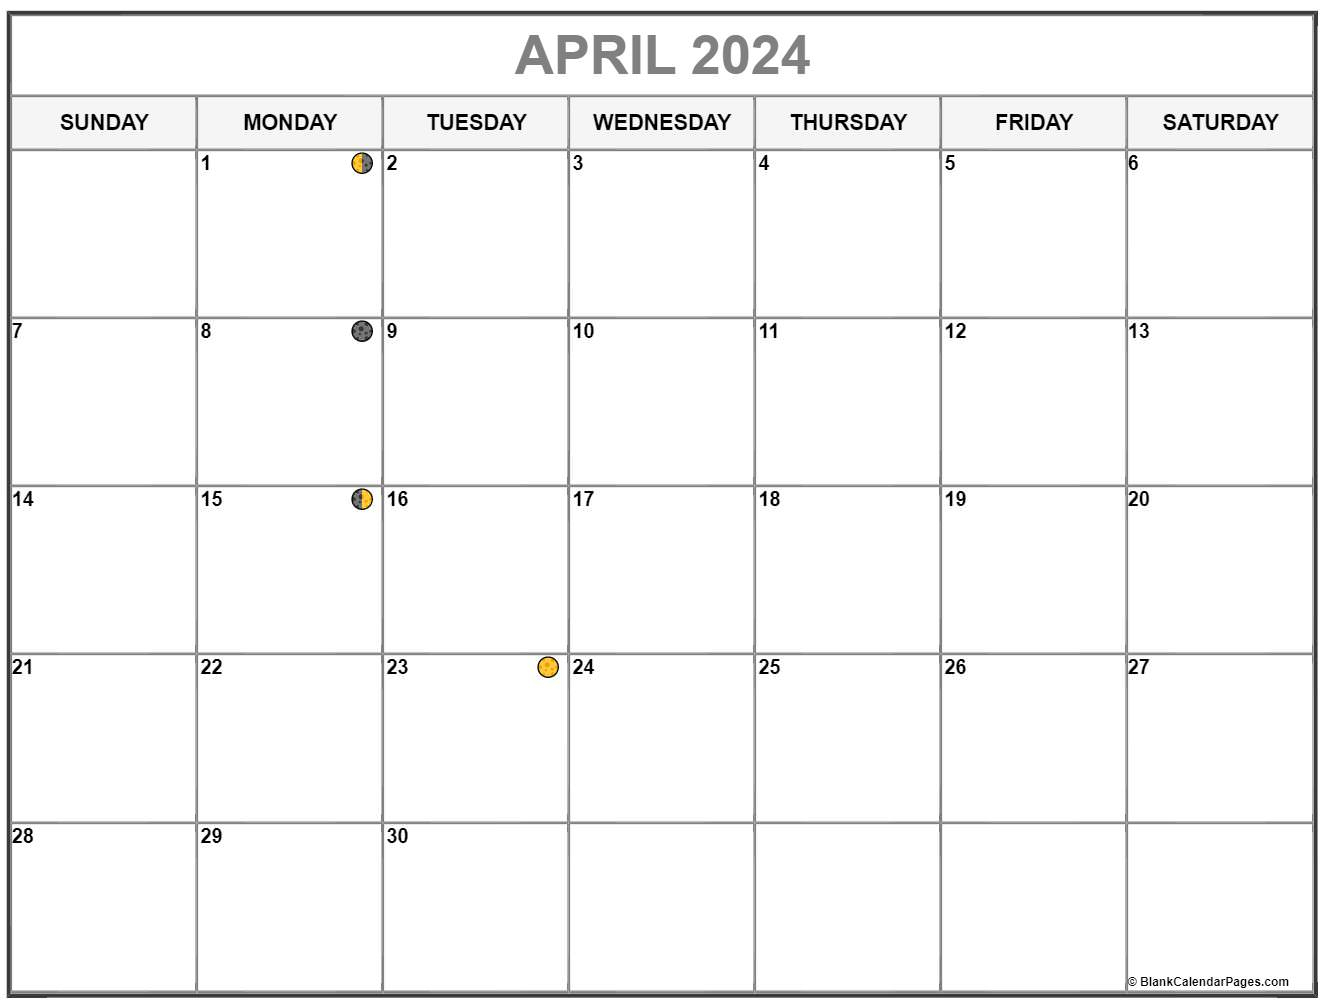 April 2024 Lunar Calendar | Moon Phase Calendar for Lunar Calendar April 2024